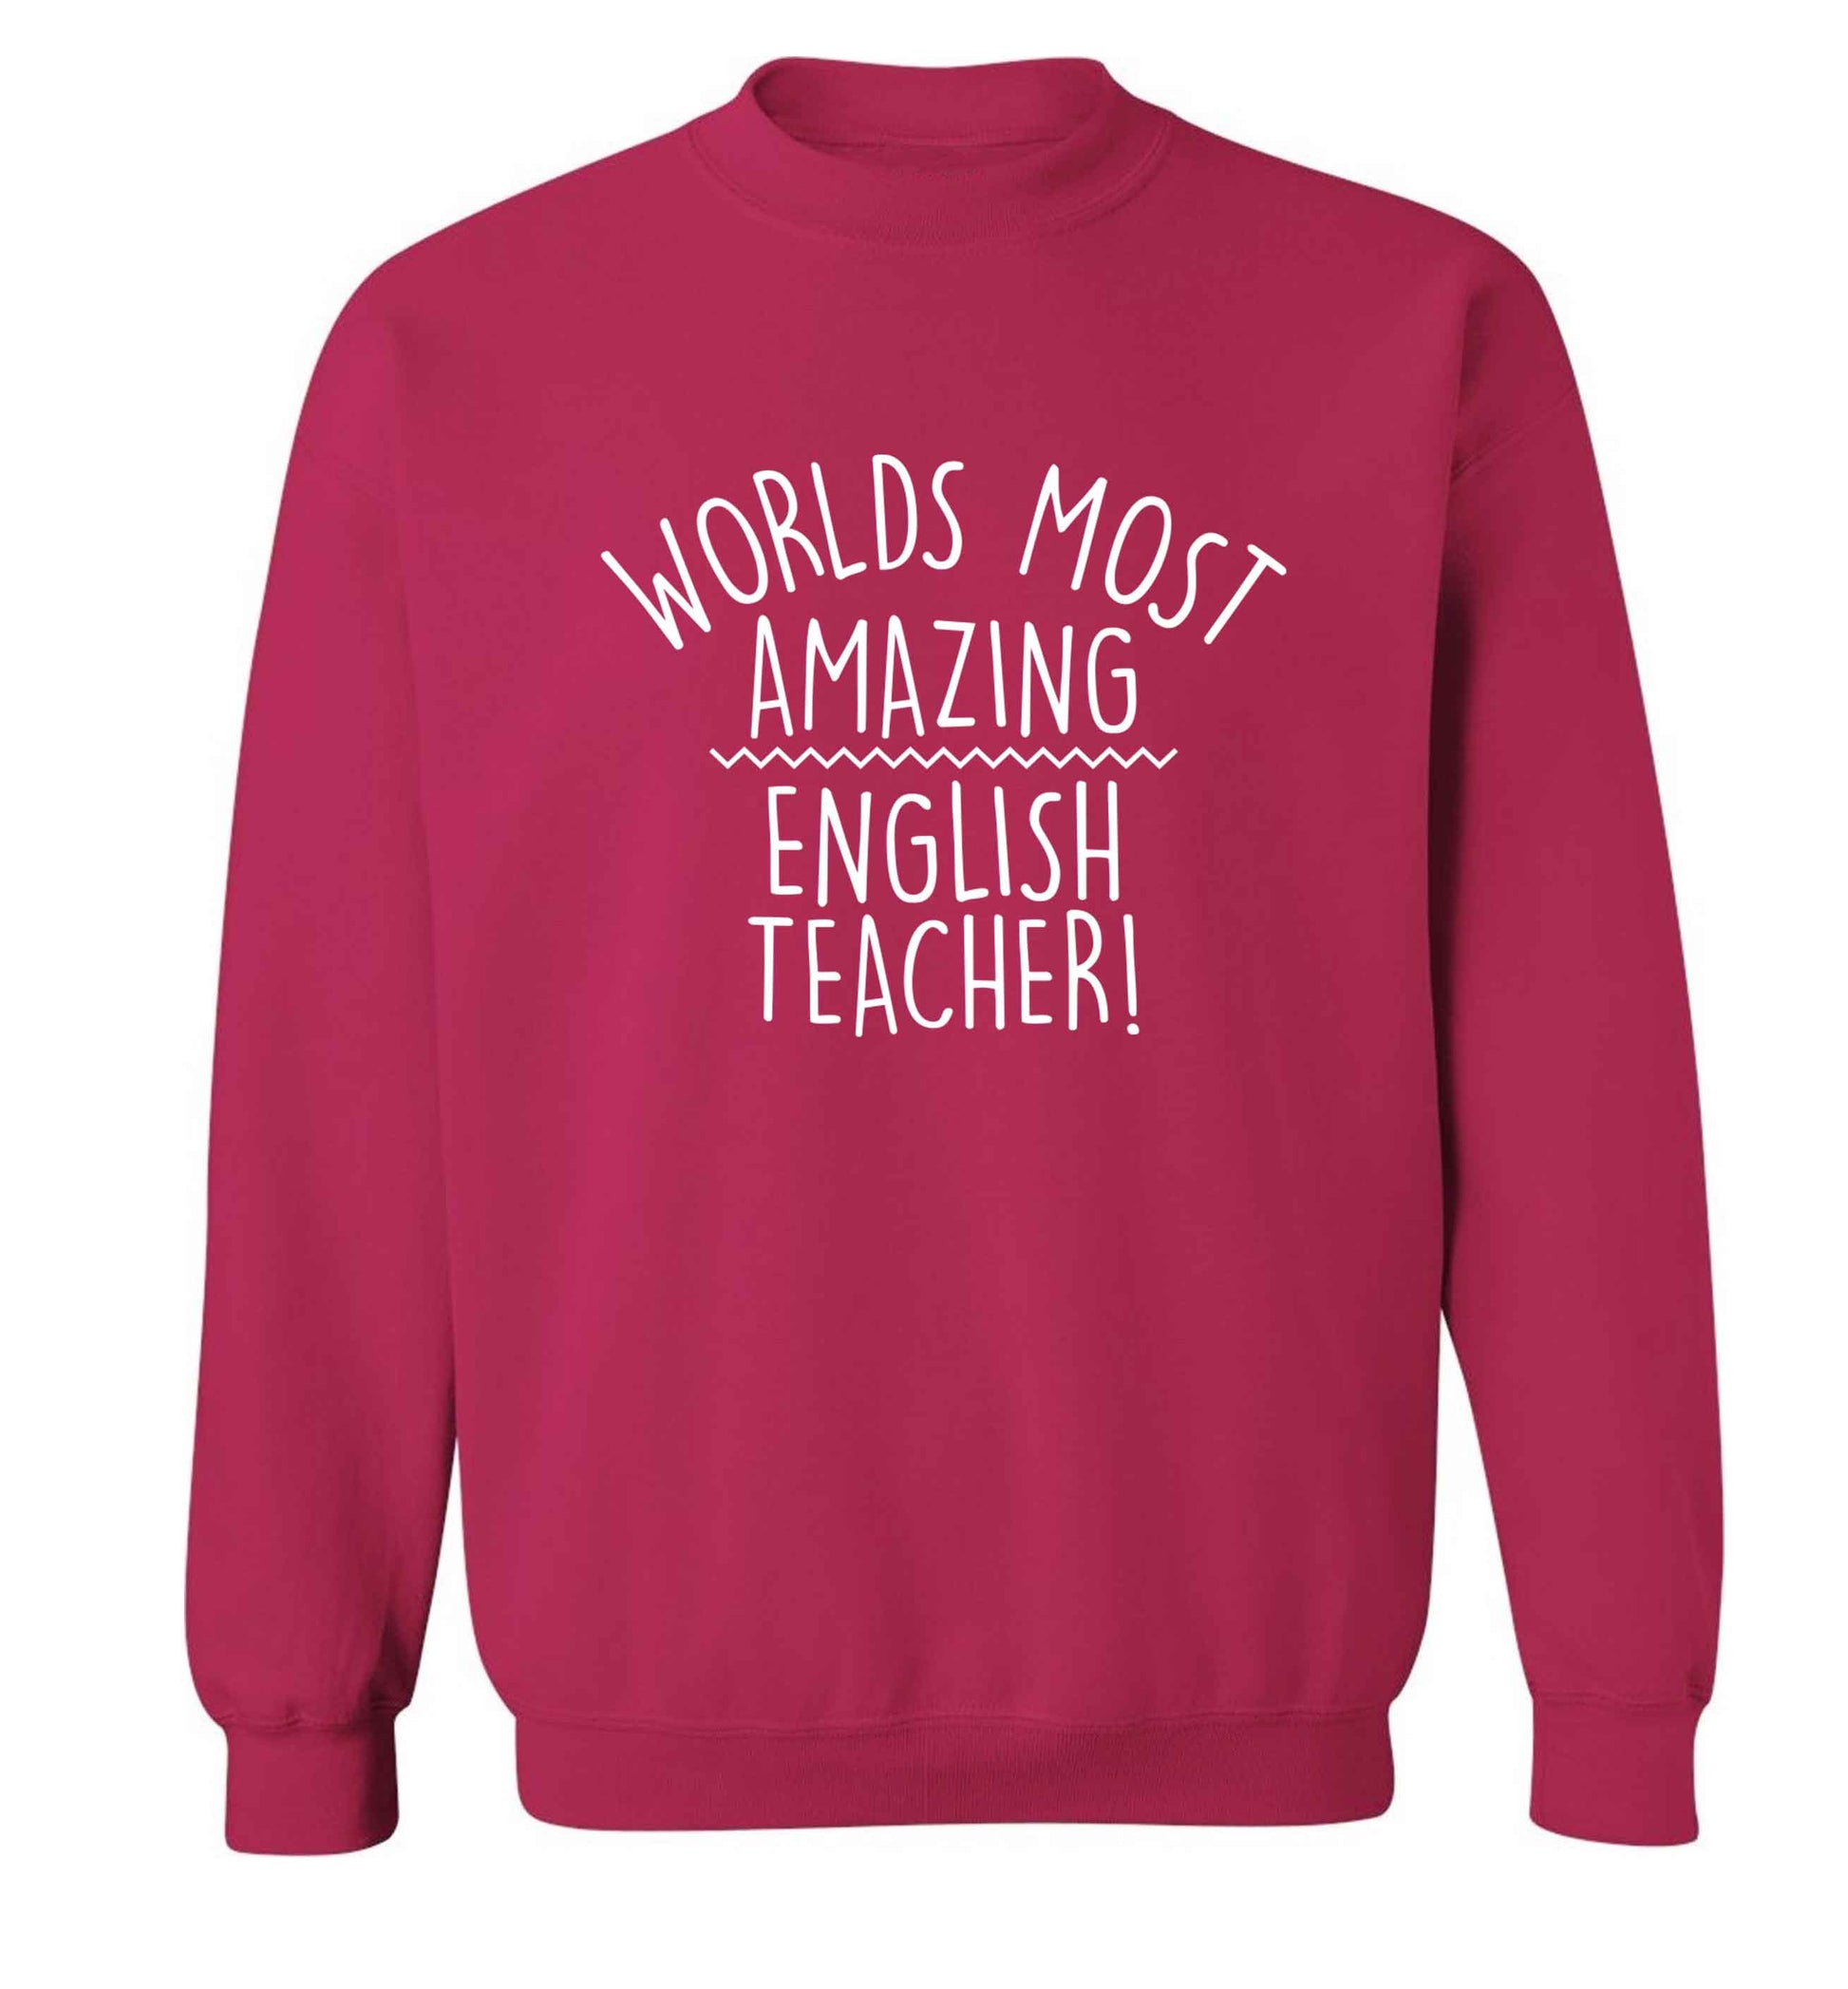 Worlds most amazing English teacher adult's unisex pink sweater 2XL